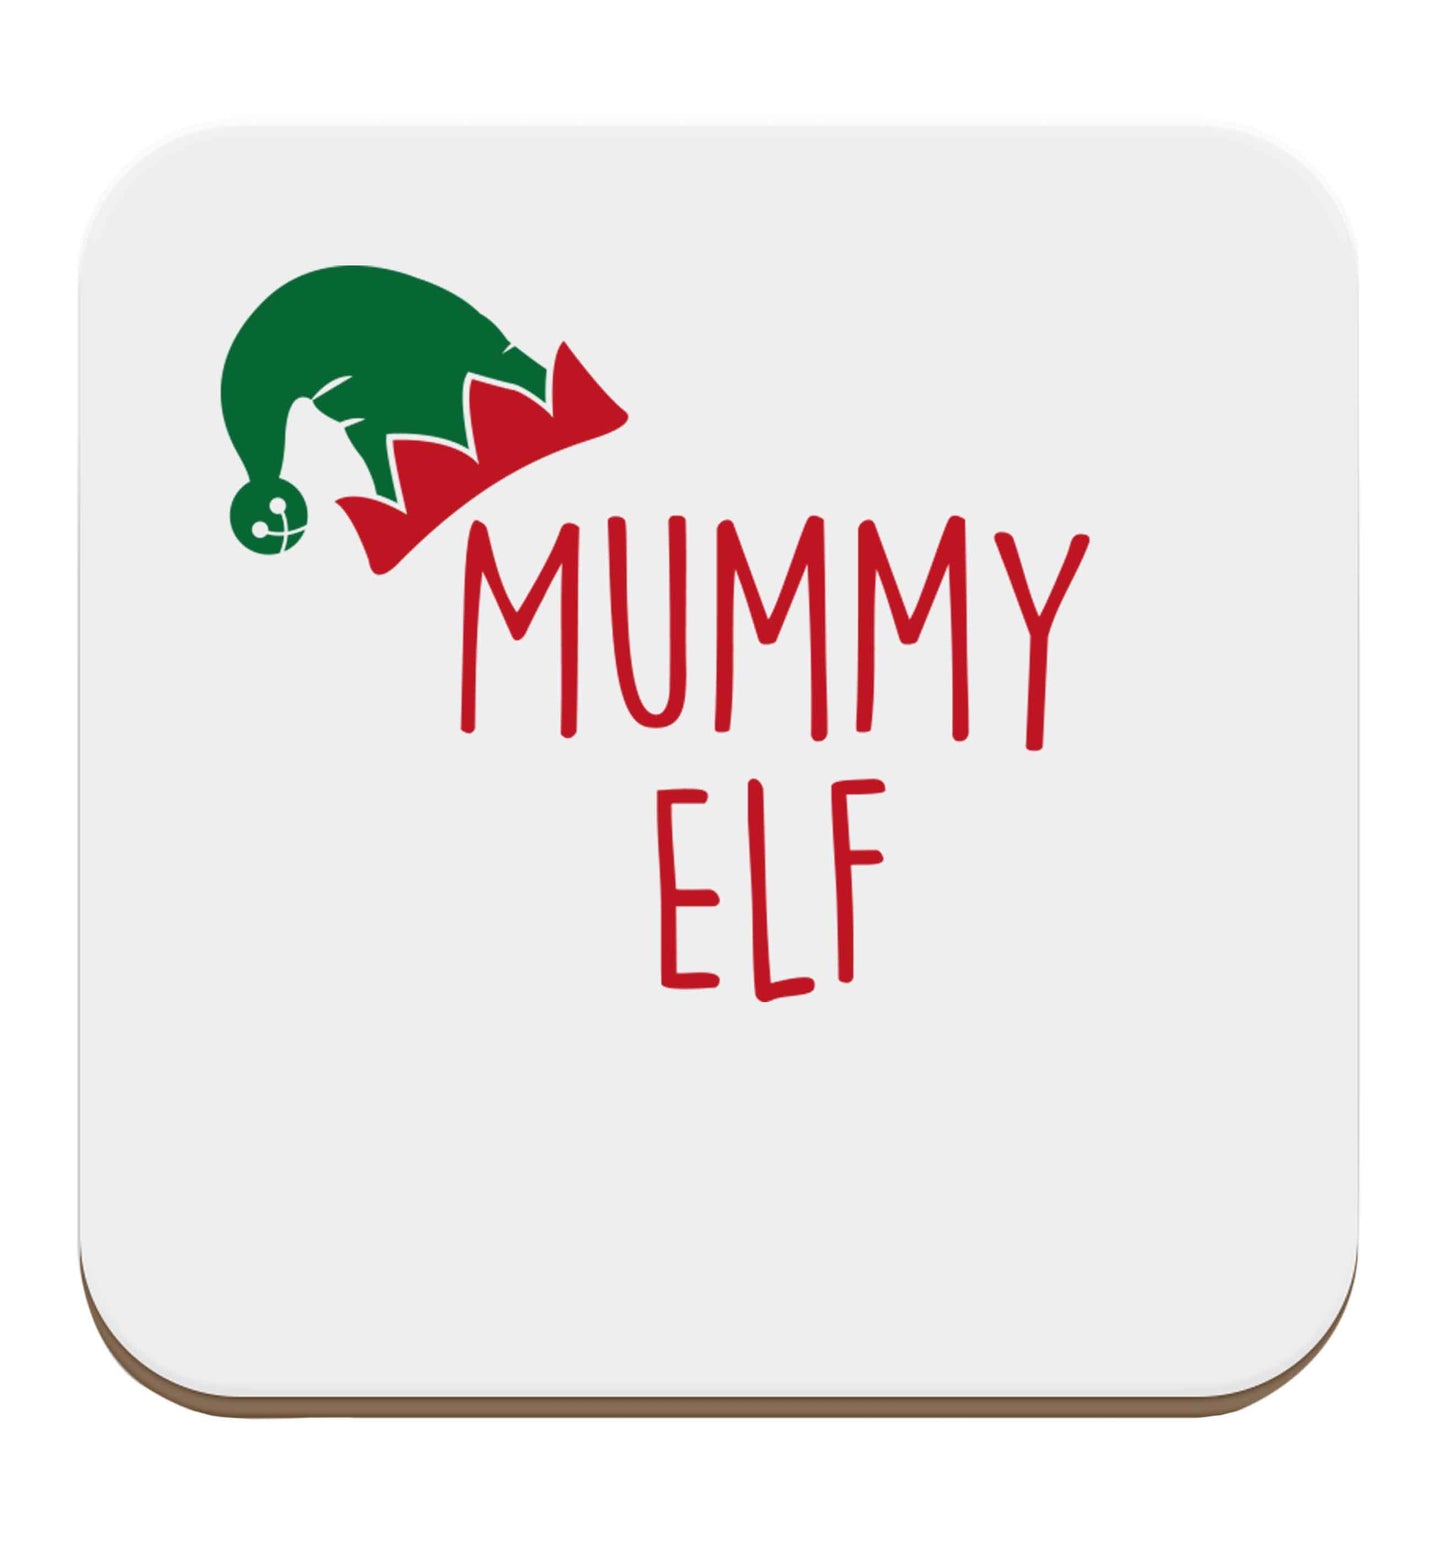 Mummy elf set of four coasters